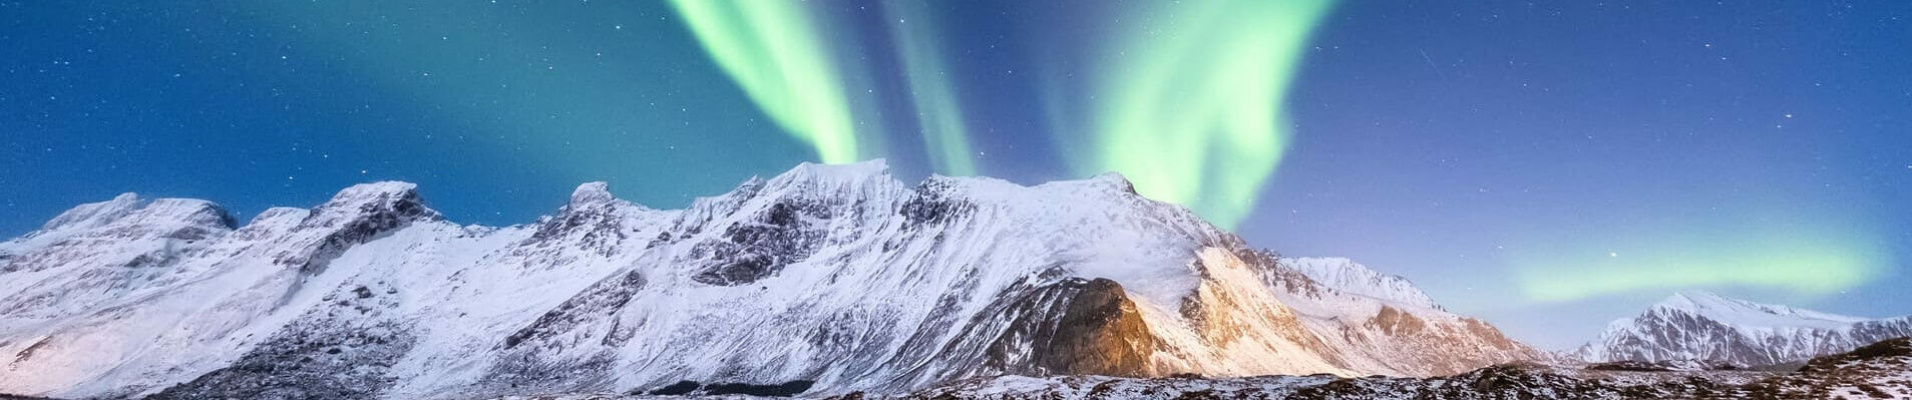 aurores-boreales-norvege